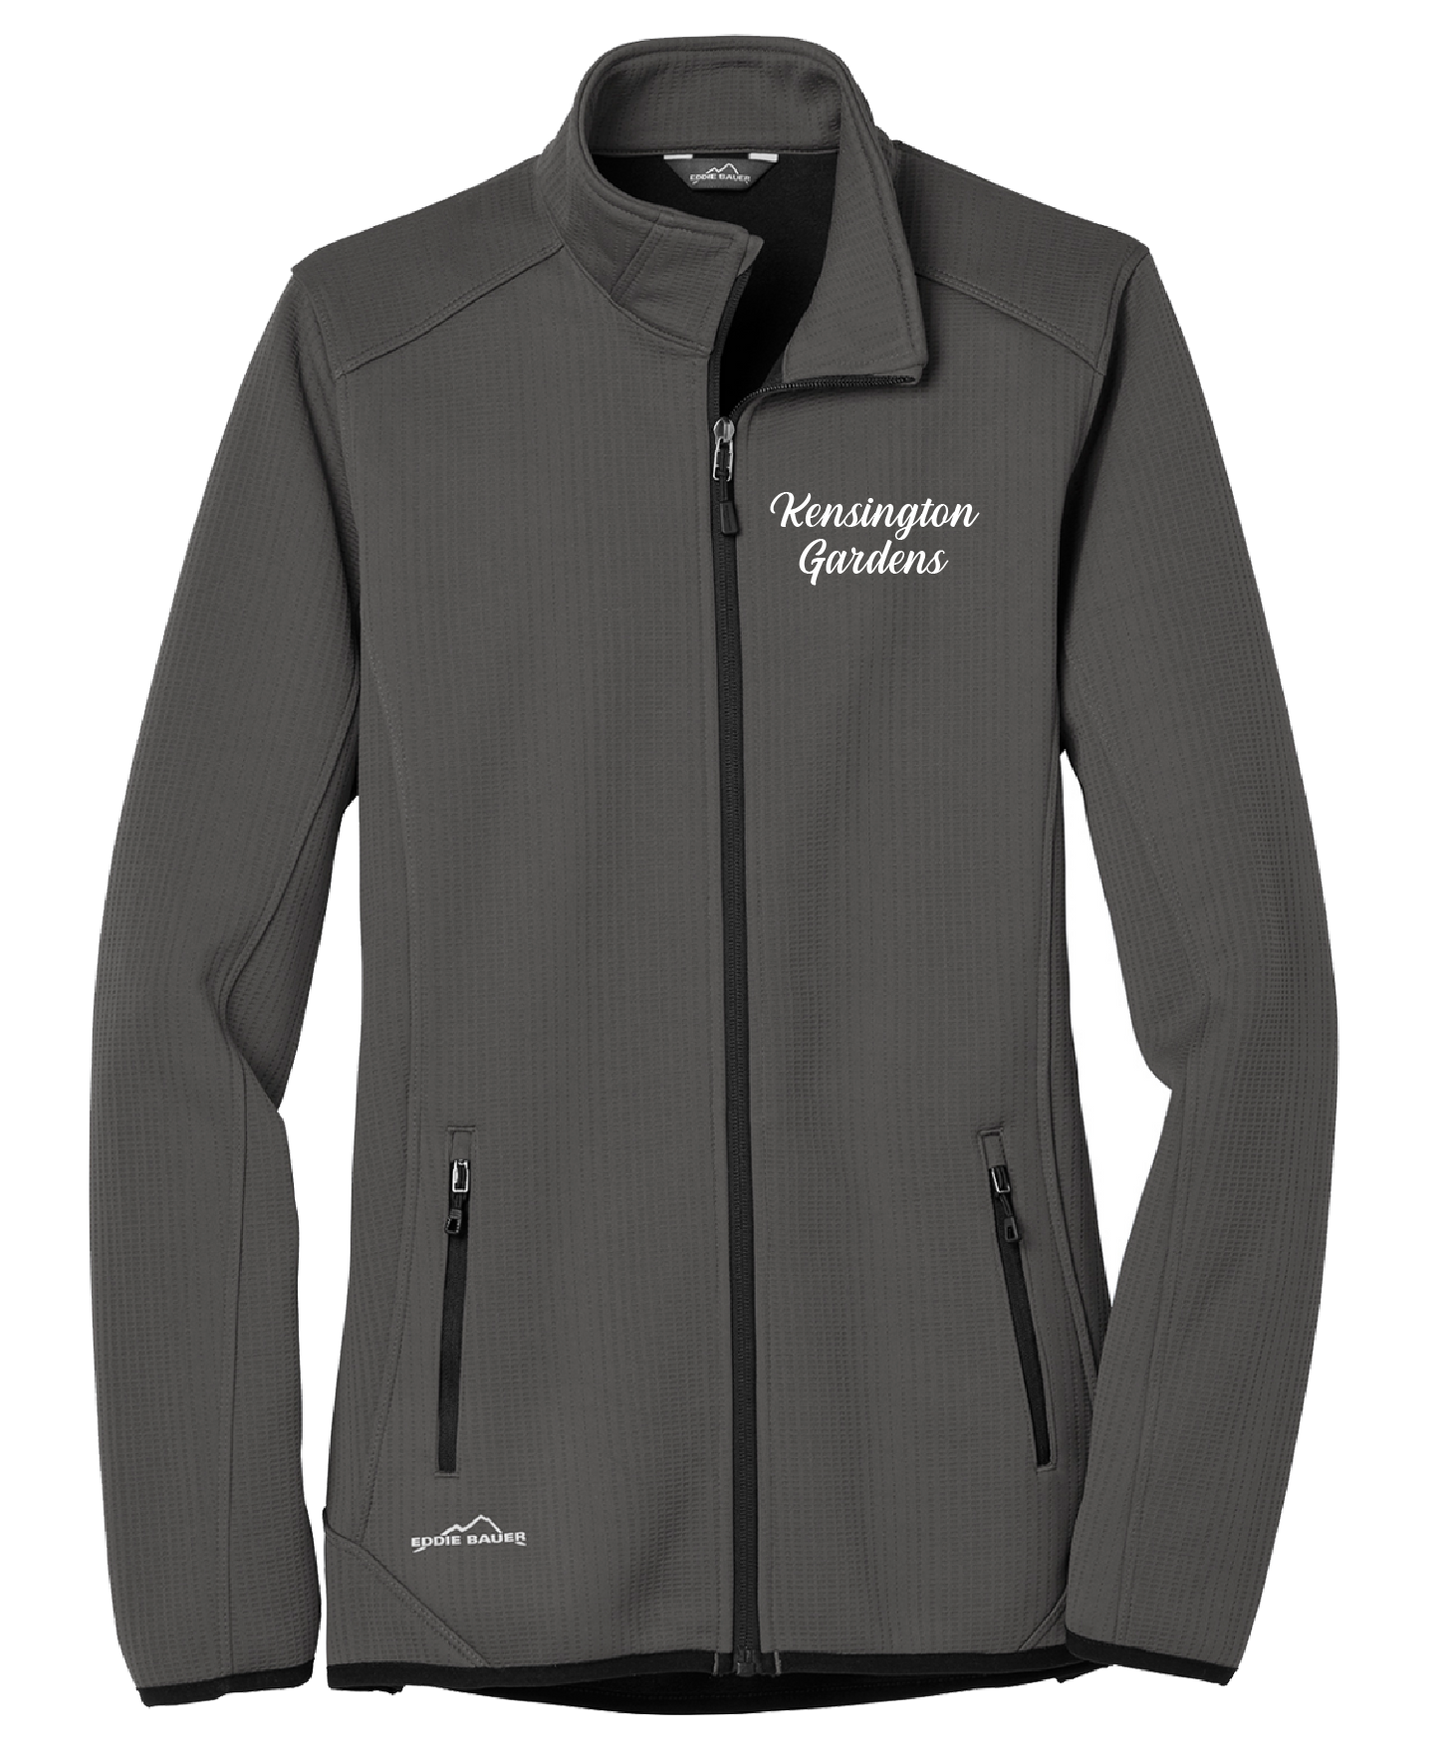 Kensington Gardens - Ladies - Eddie Bauer ® Dash Full-Zip Fleece Jacket